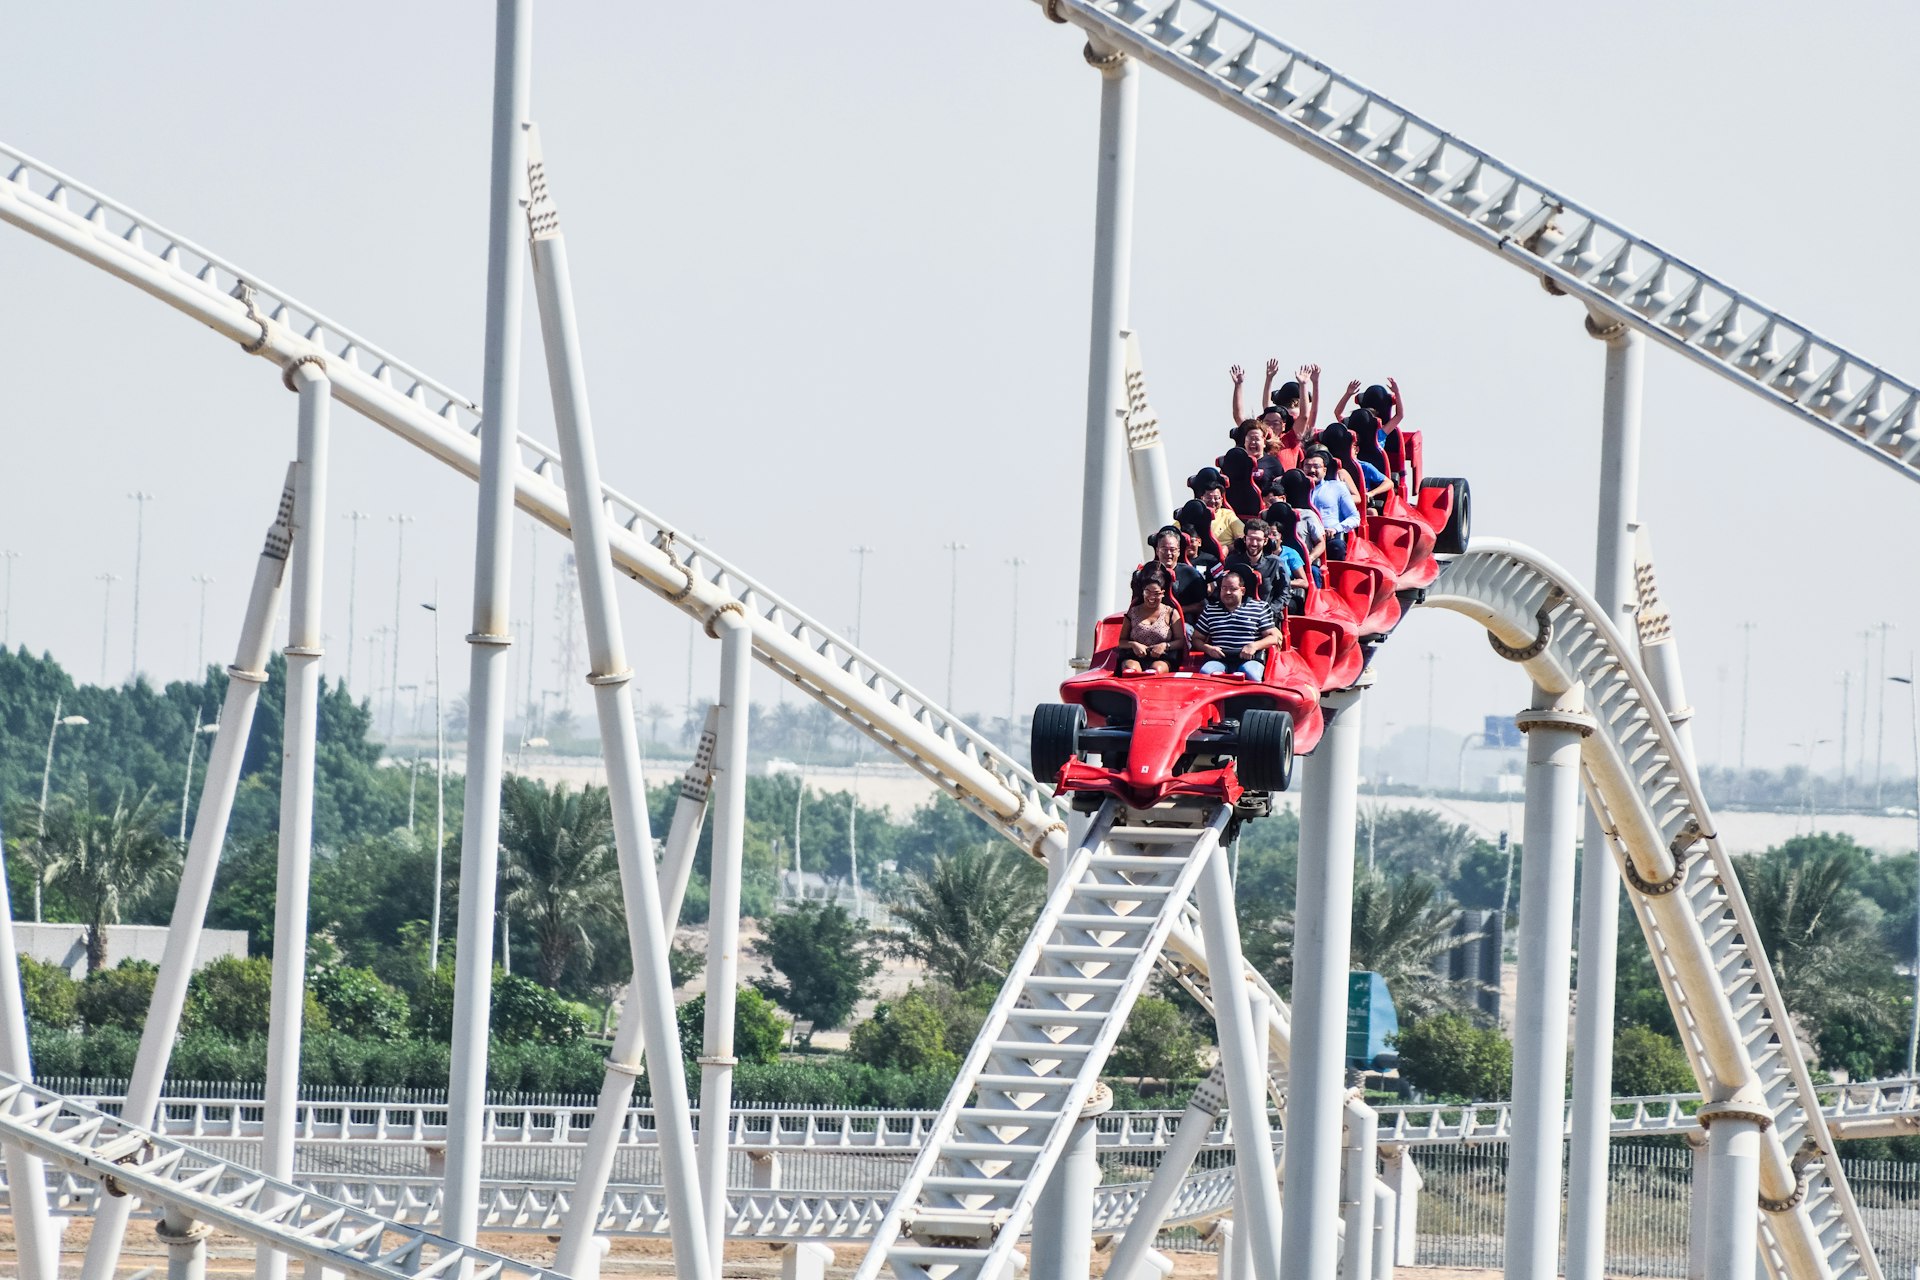 Formula Rossa, the fastest roller coaster in the world, at Ferrari World, Yas Island, Abu Dhabi, United Arab Emirates